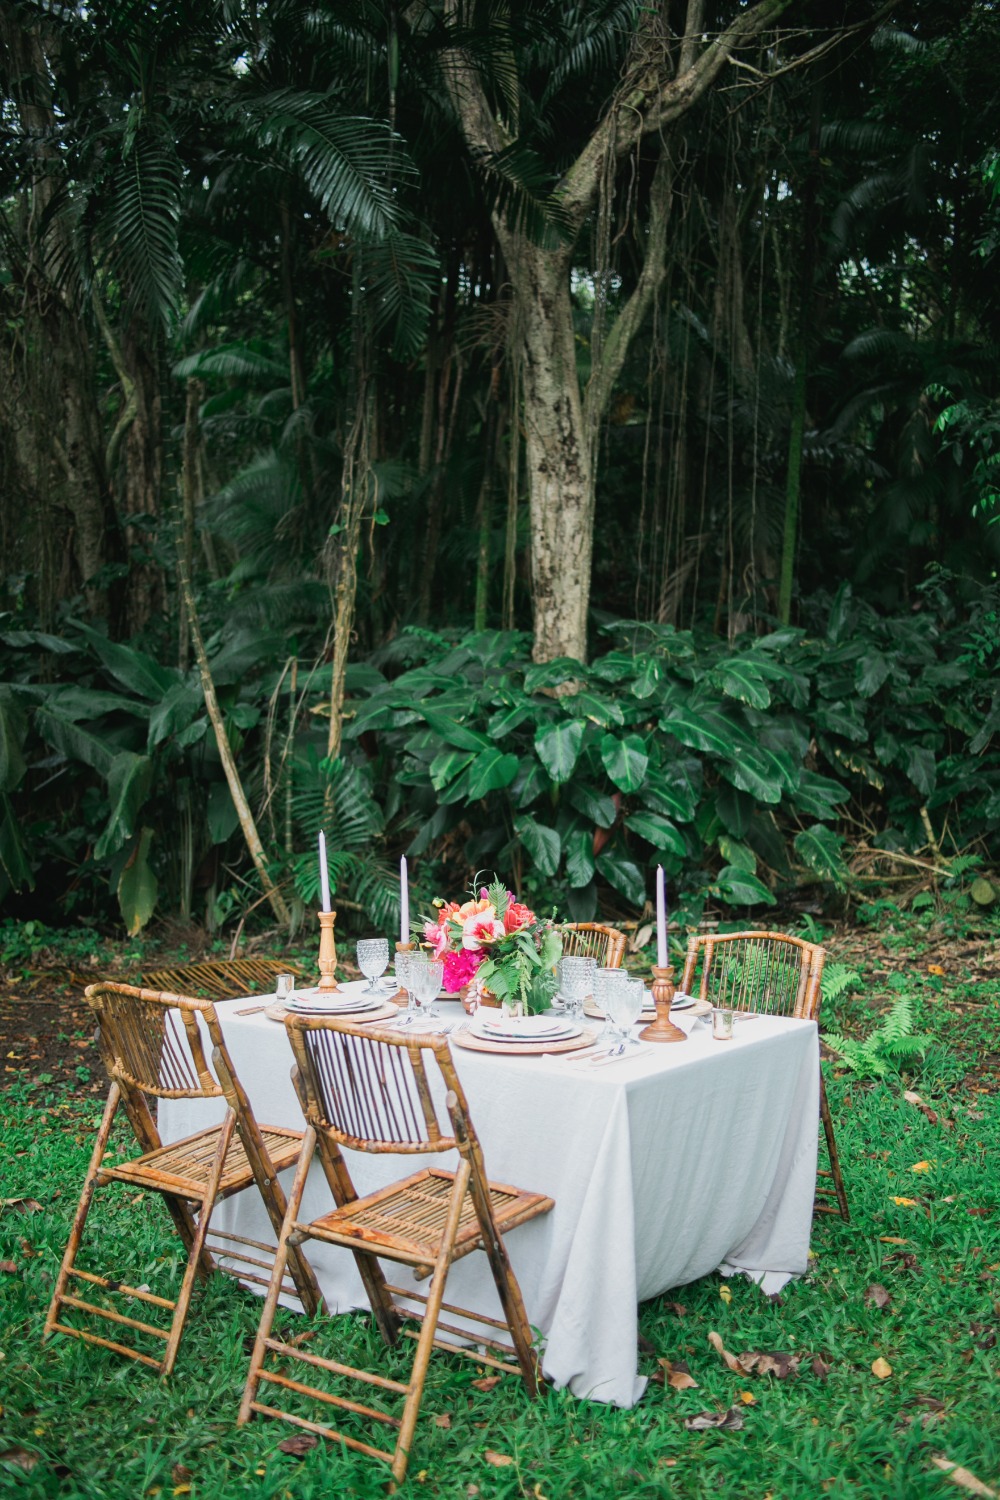 Tropical outdoor tablescape